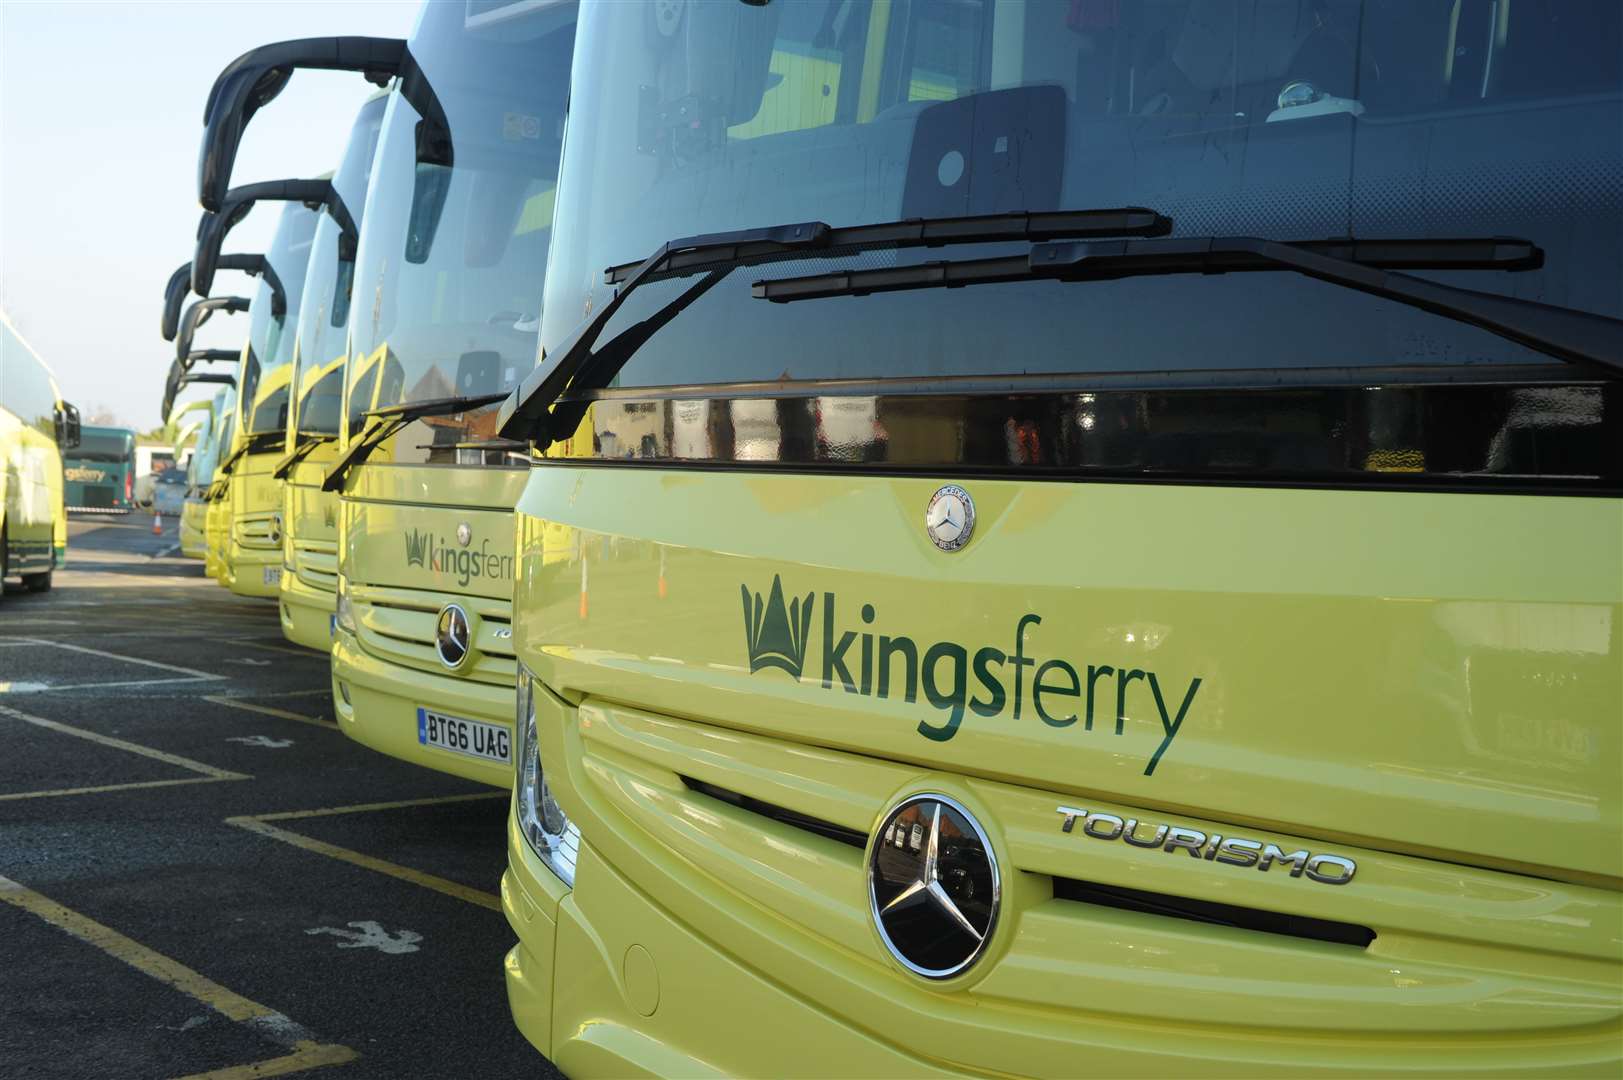 King Ferry Coach Co, Eastcourt Lane, Gillingham. Picture: Steve Crispe